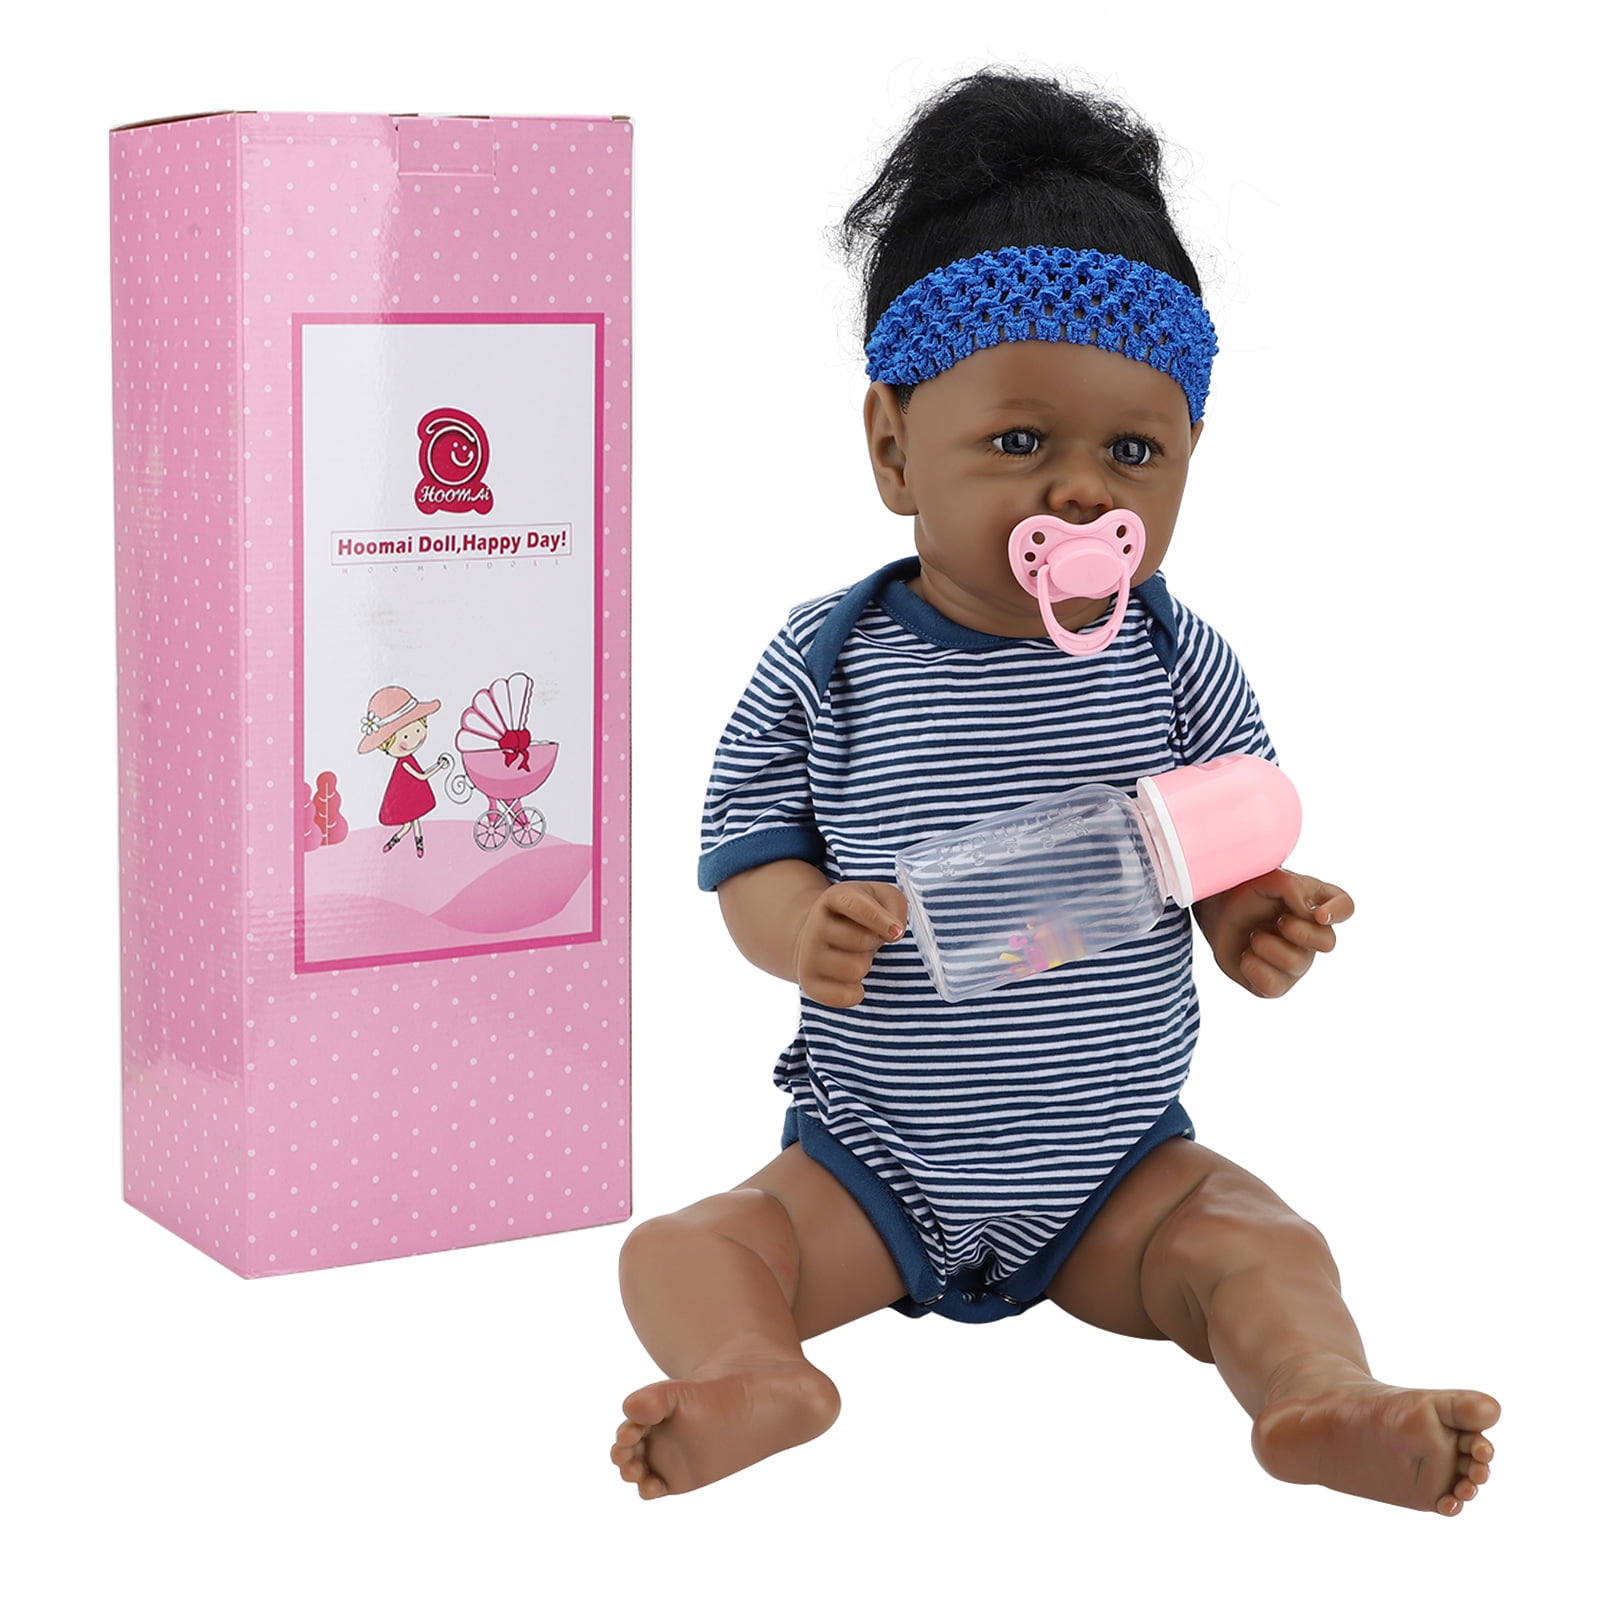 huntermoon 22inch Black Reborn Newborn Baby Dolls Full Body Silicone  Realistic Alive Simulation girl Doll Xmas Gift-